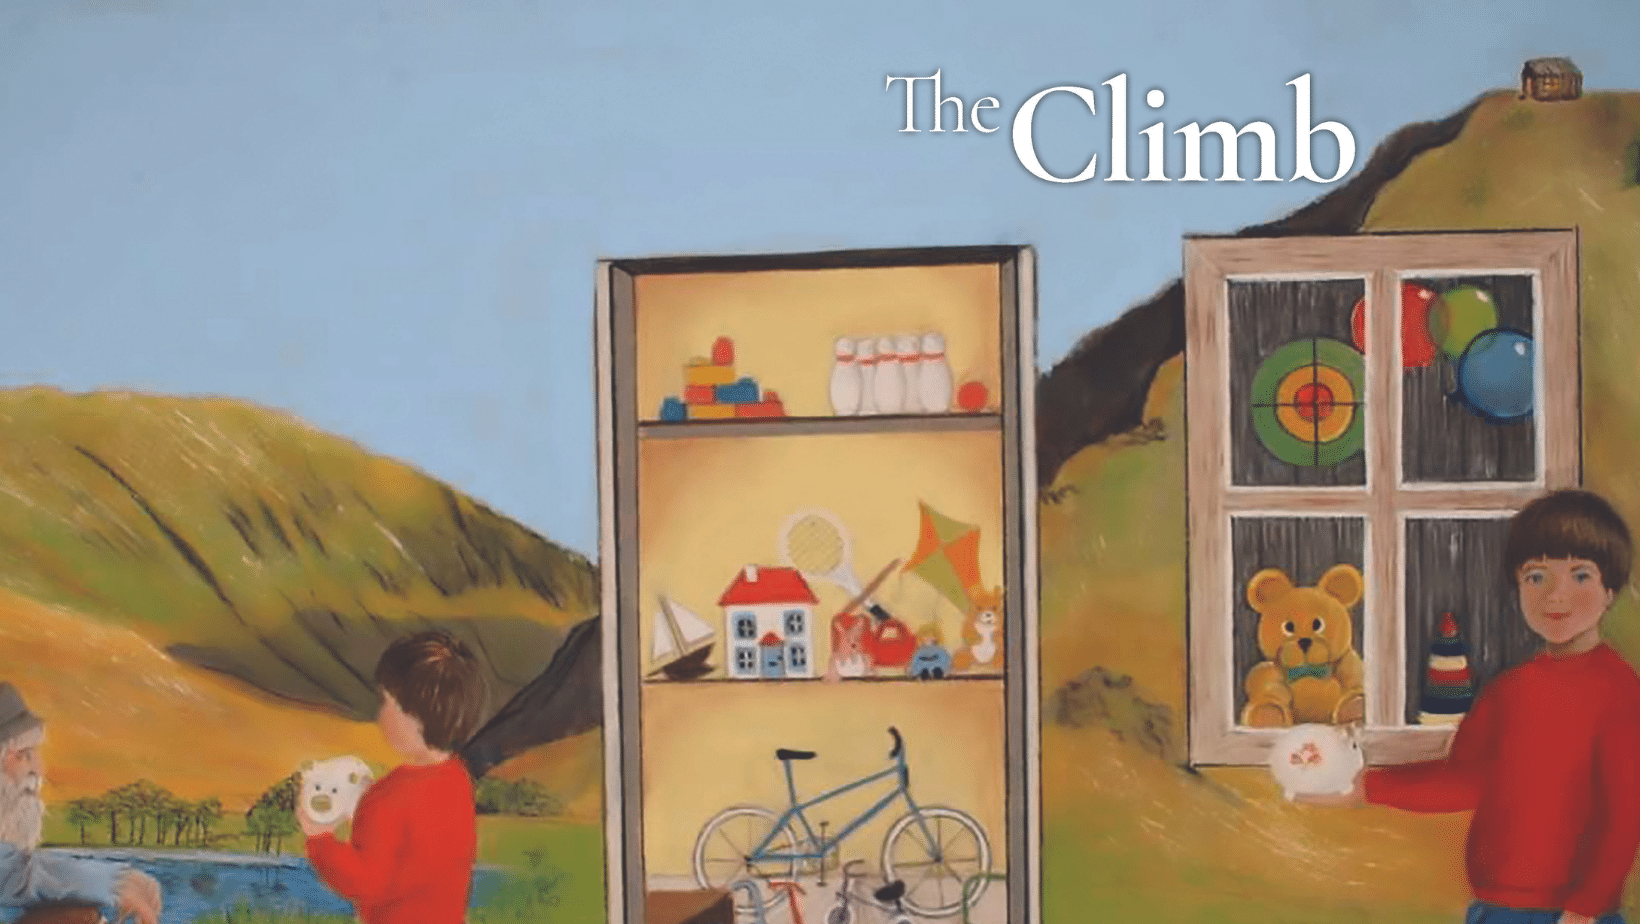 Book Launch News: The Climb by Martin Bissett